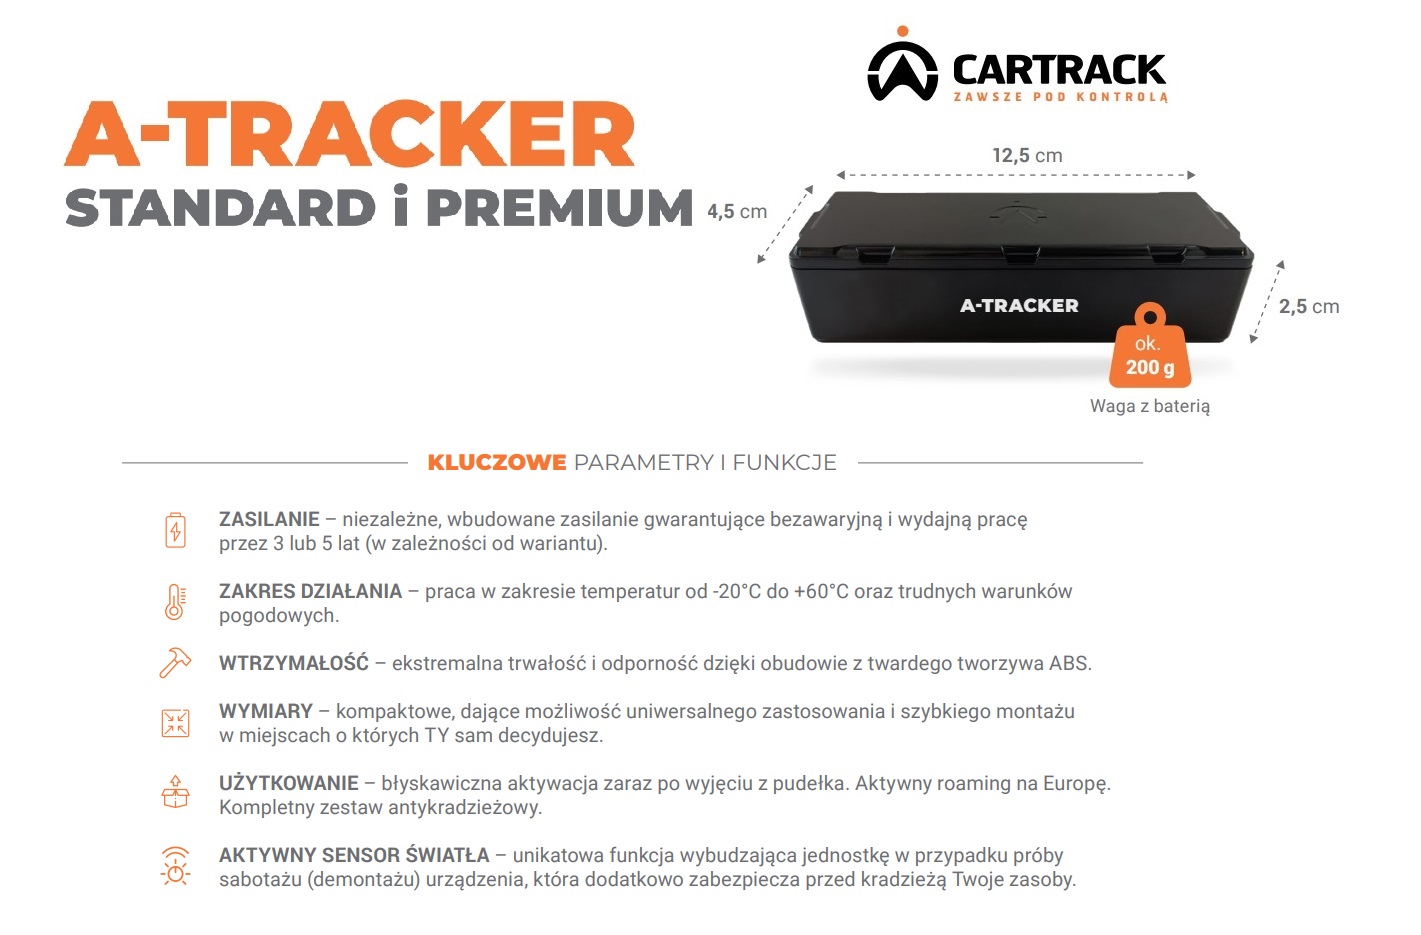 gps tracker, tracker gps, lokalizator gps, cartrack